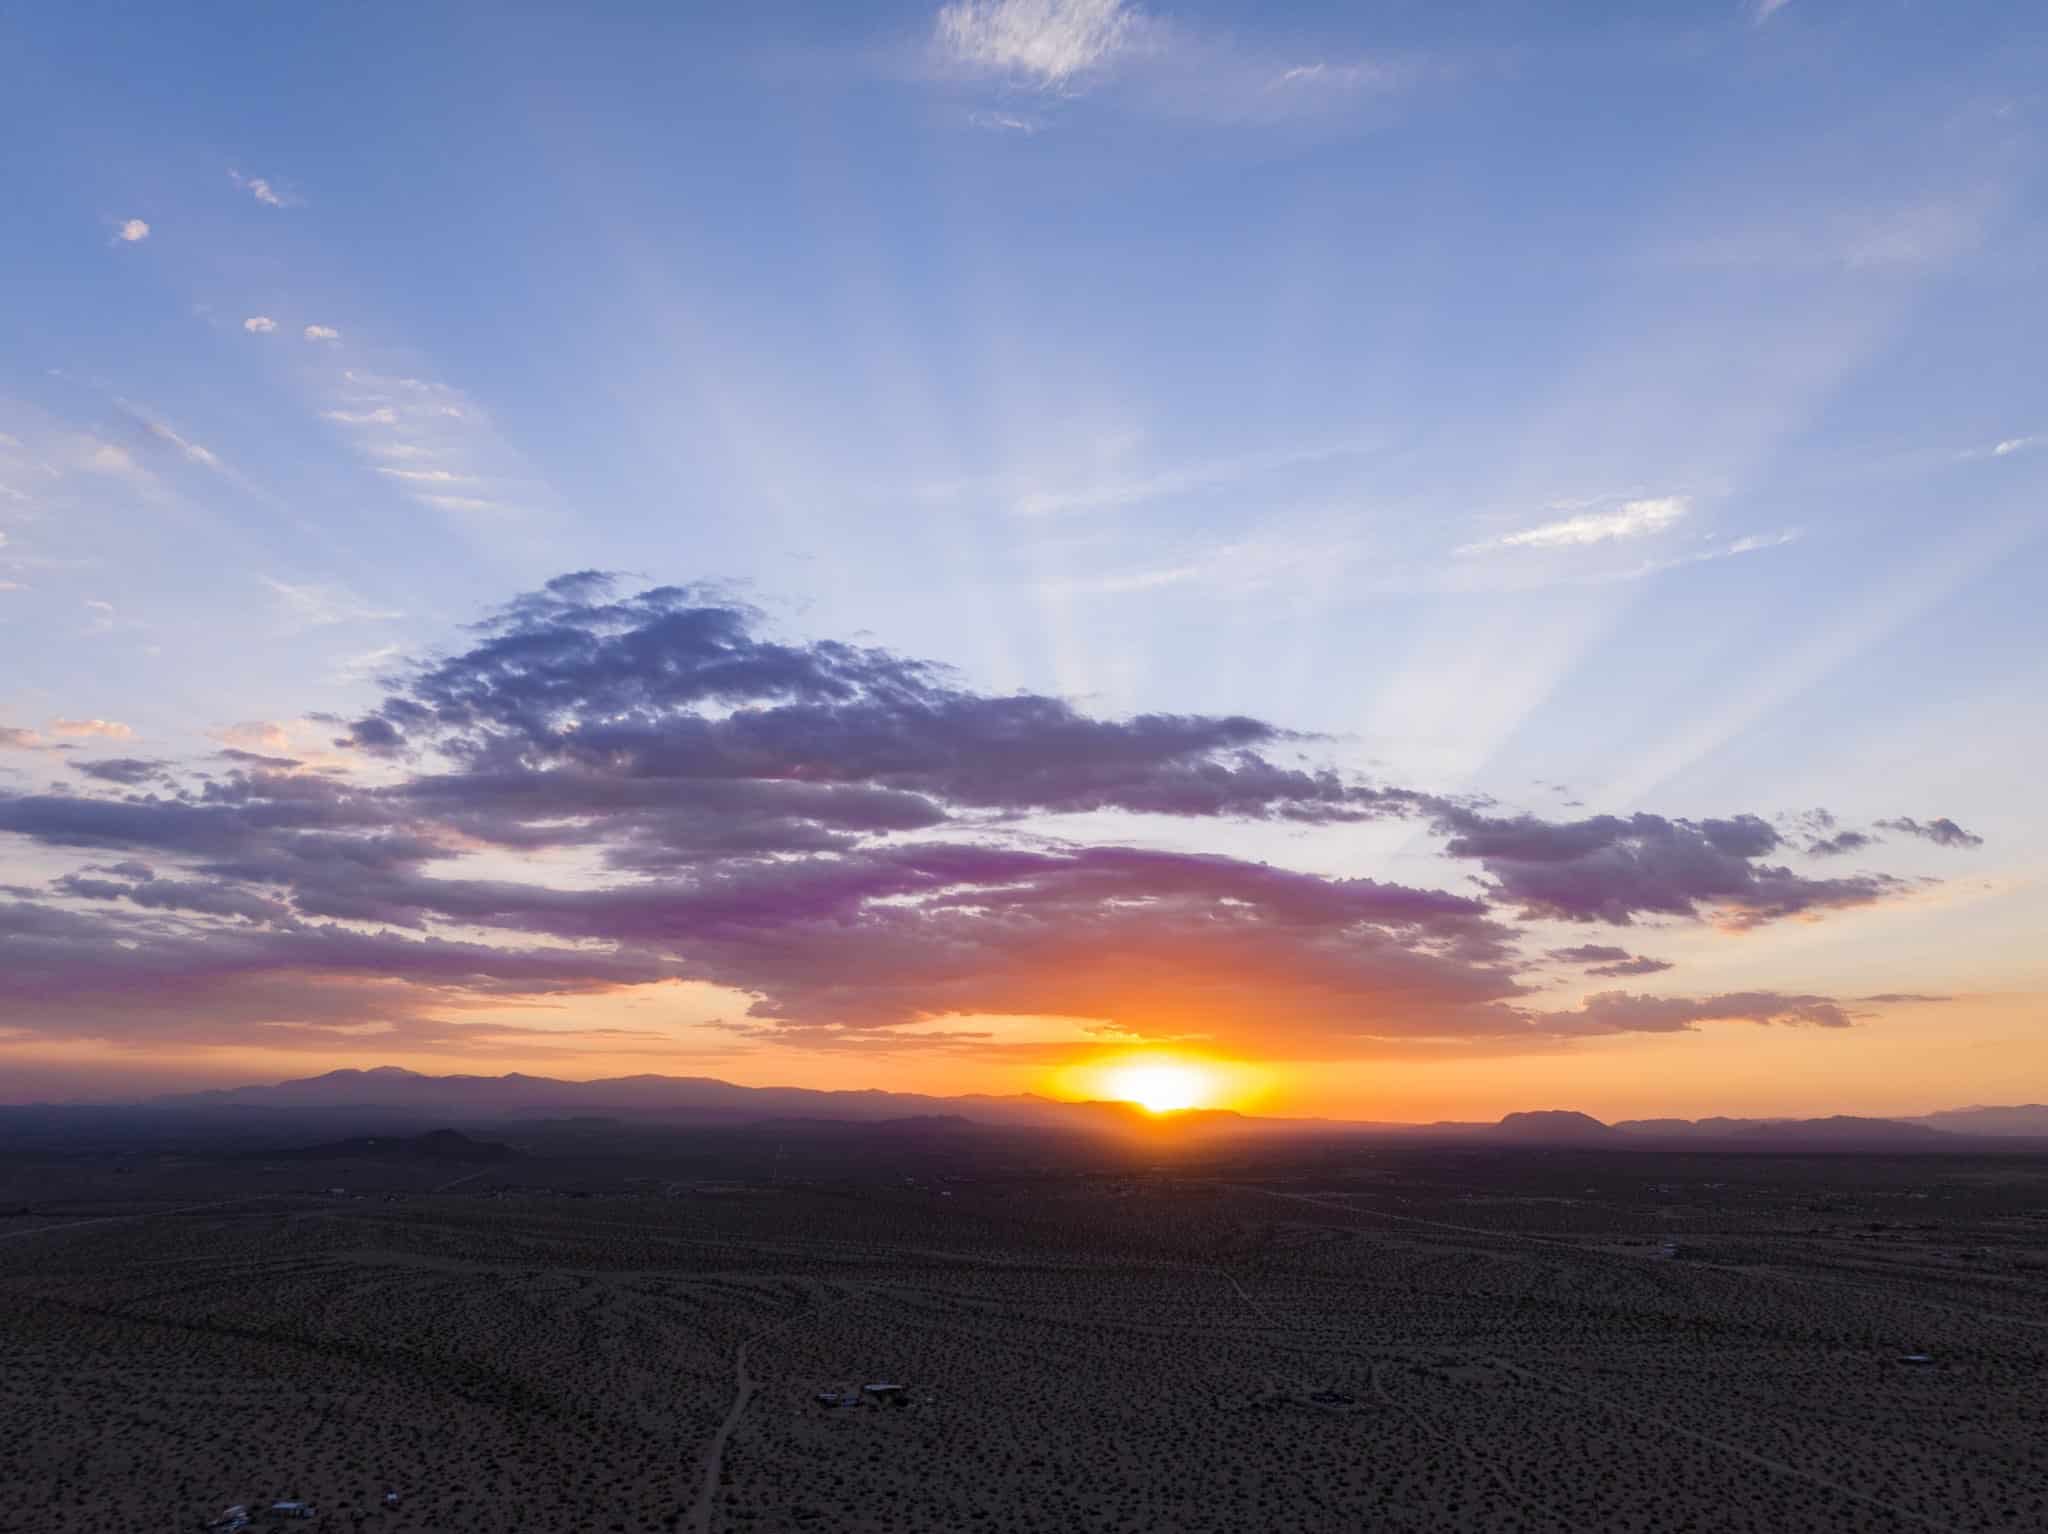 Stuart Palley Photo of the sunrise